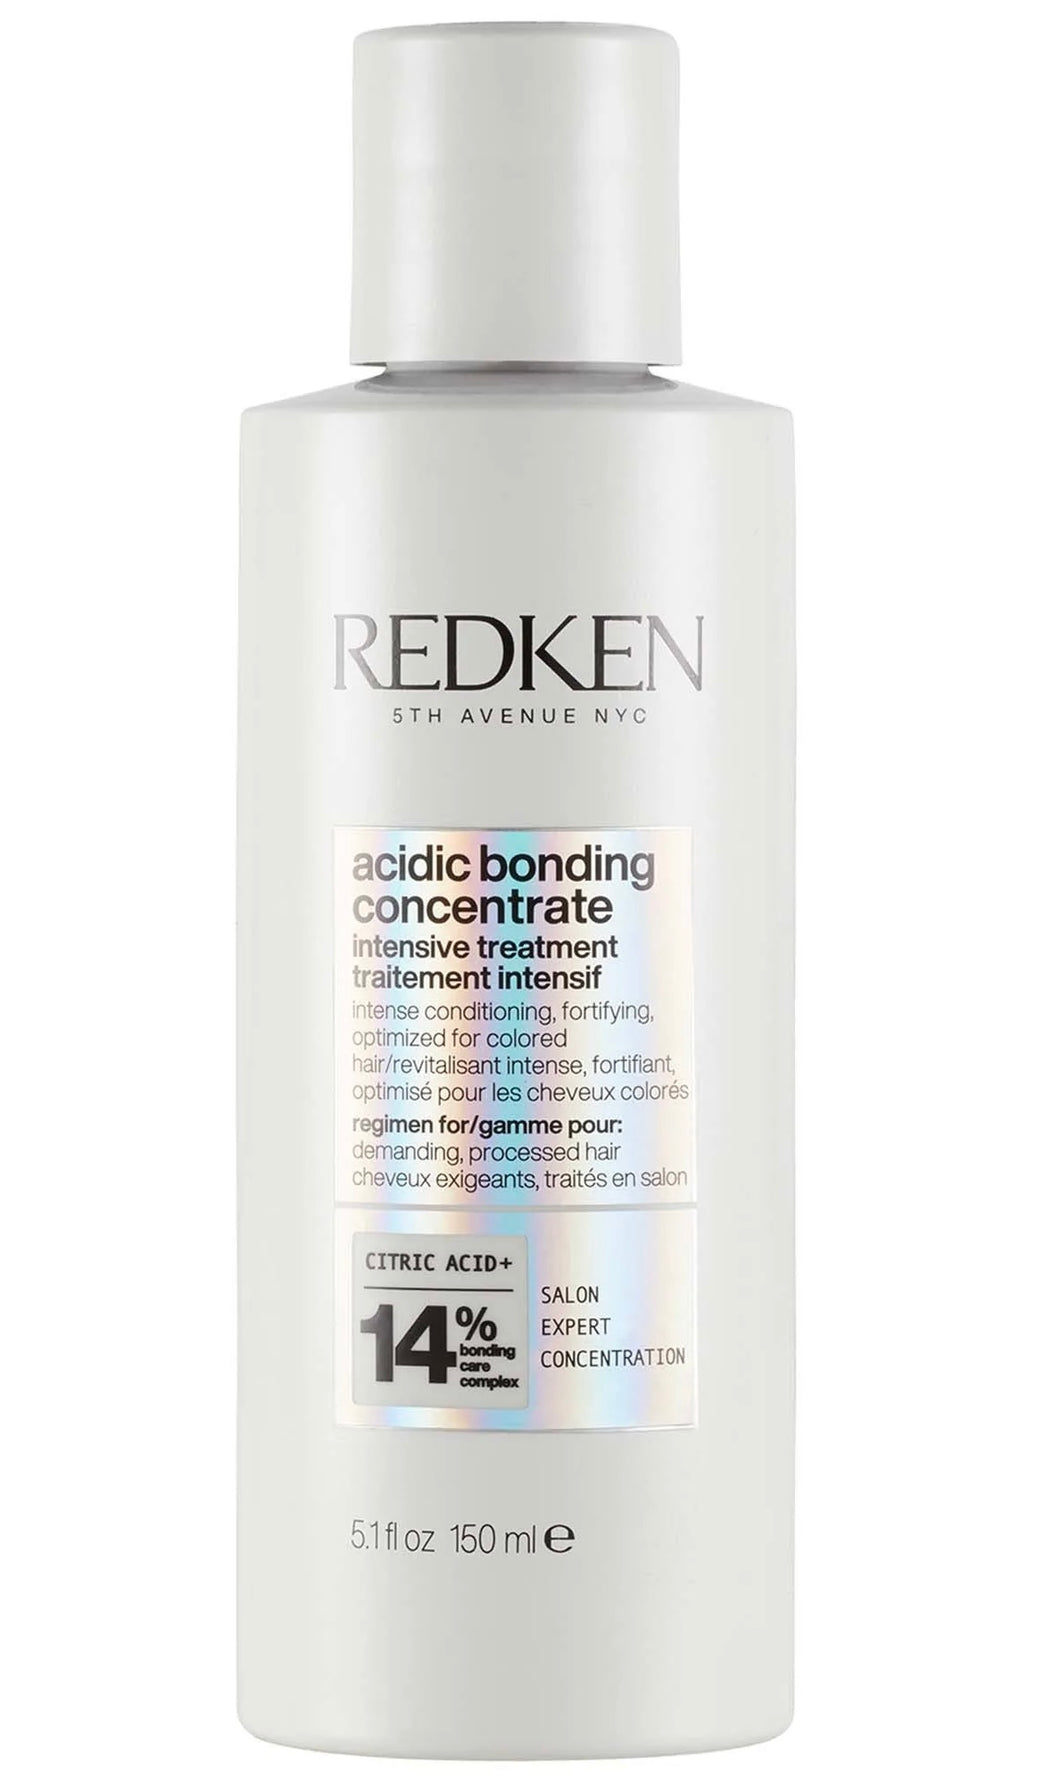 Redken Acidic Bonding Concentrate Intensive Treatment Mask for Damaged Hair